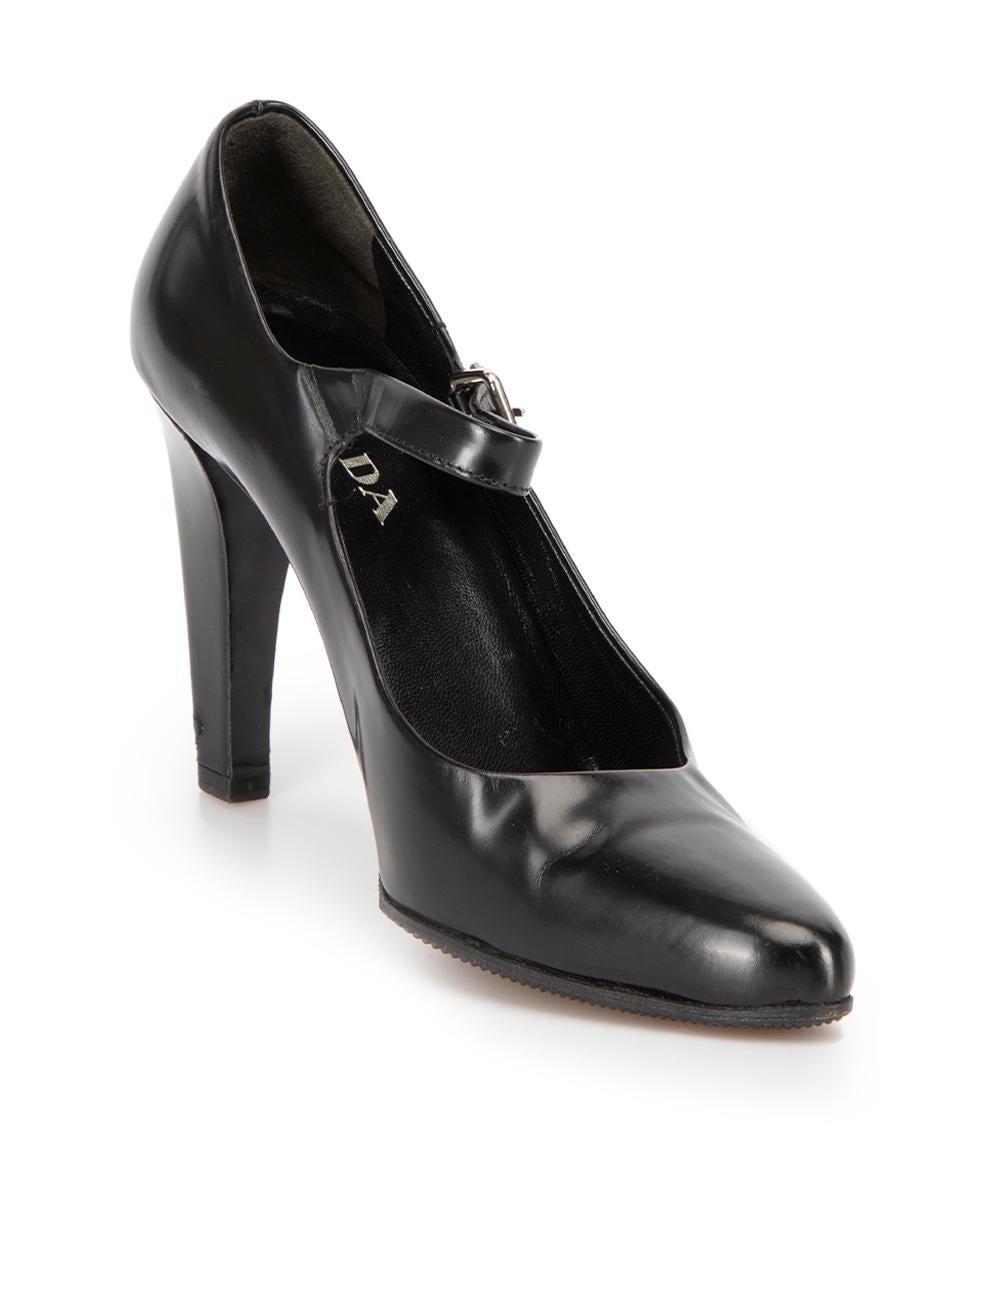 Prada Mary Jane Shoes - 5 For Sale on 1stDibs  prada mary jane boots,  prada mary jane heels, prada mary jane pumps